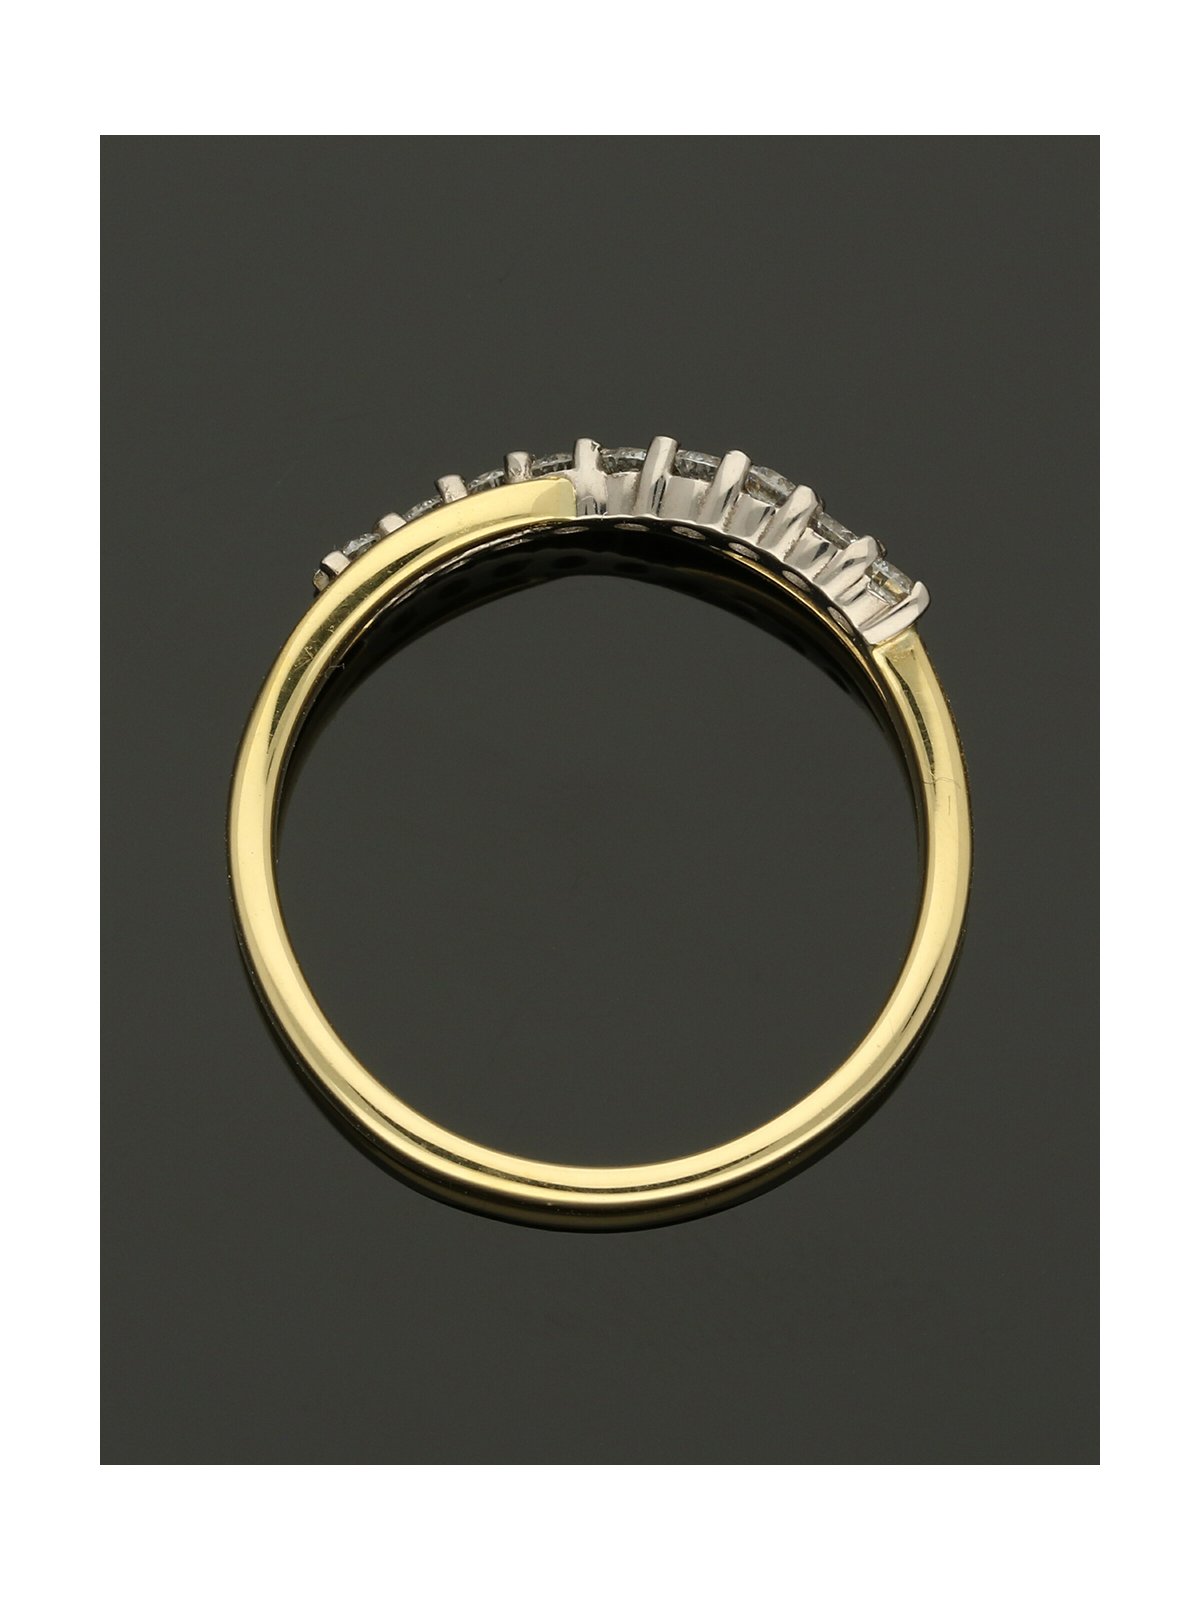 Diamond Half Eternity Ring 0.33ct Round Brilliant Cut in 18ct Yellow & White Gold